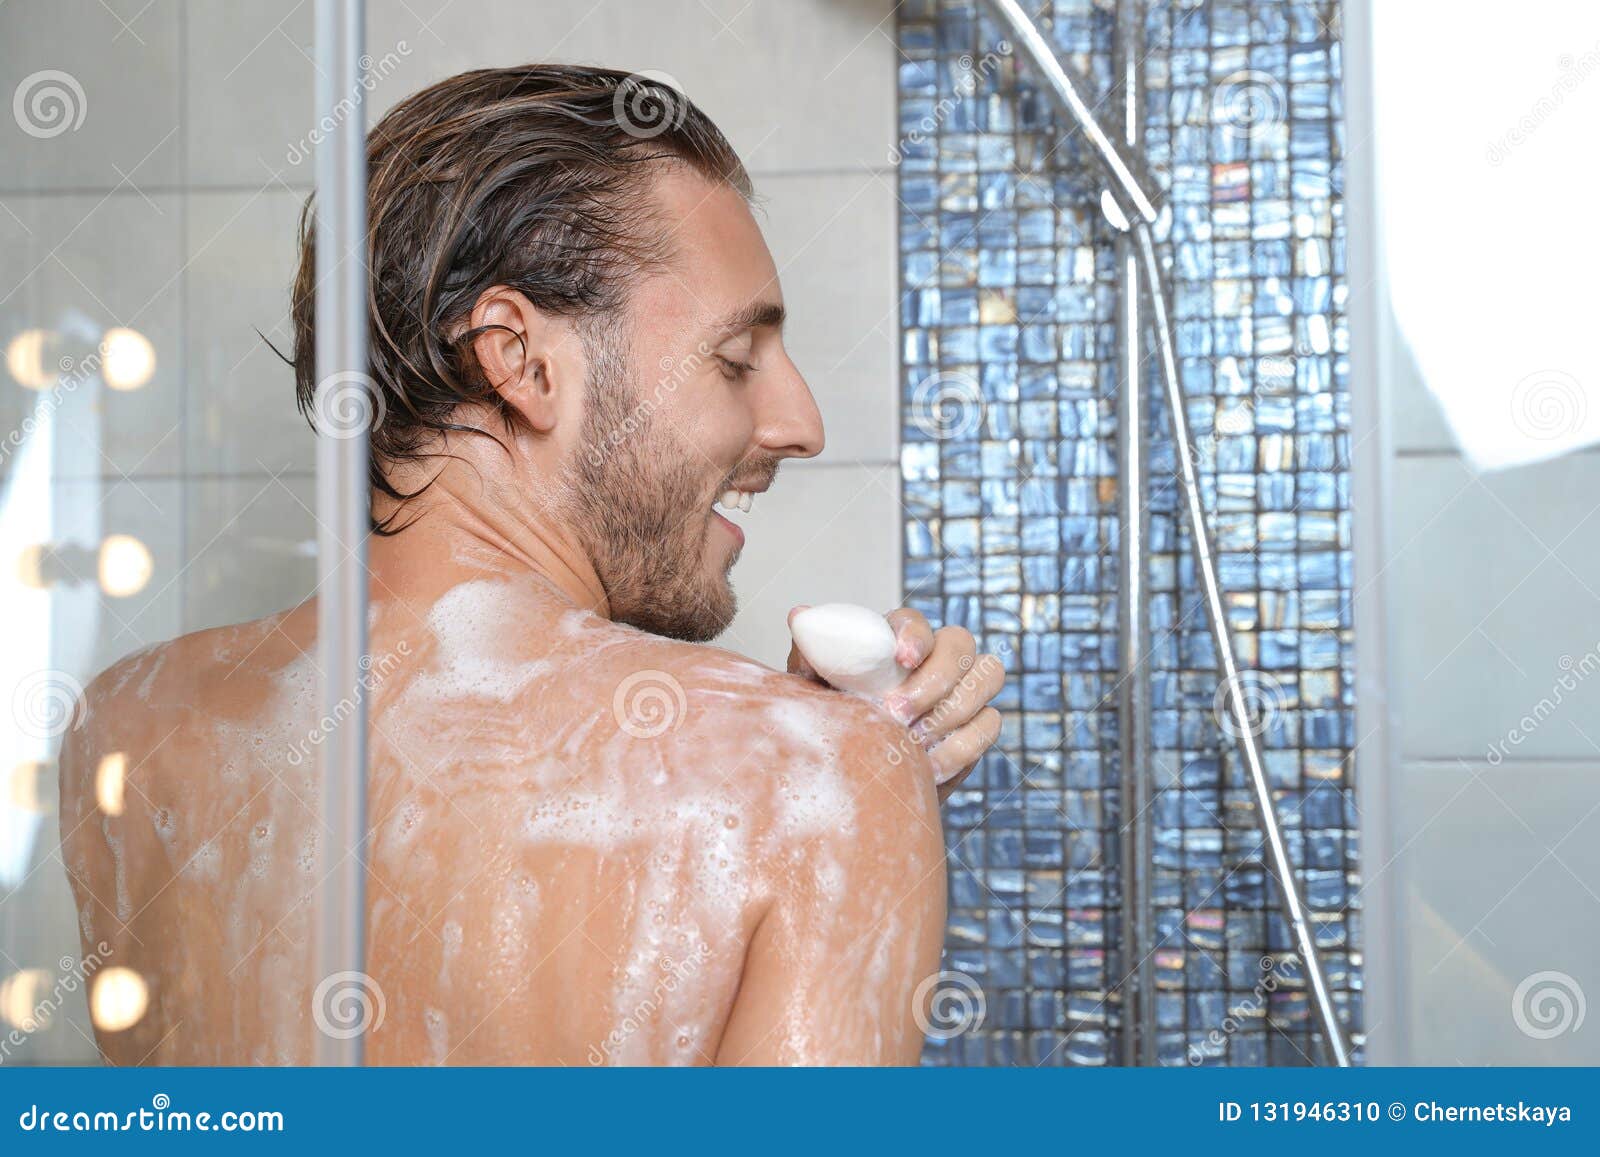 selfie shower bath soap